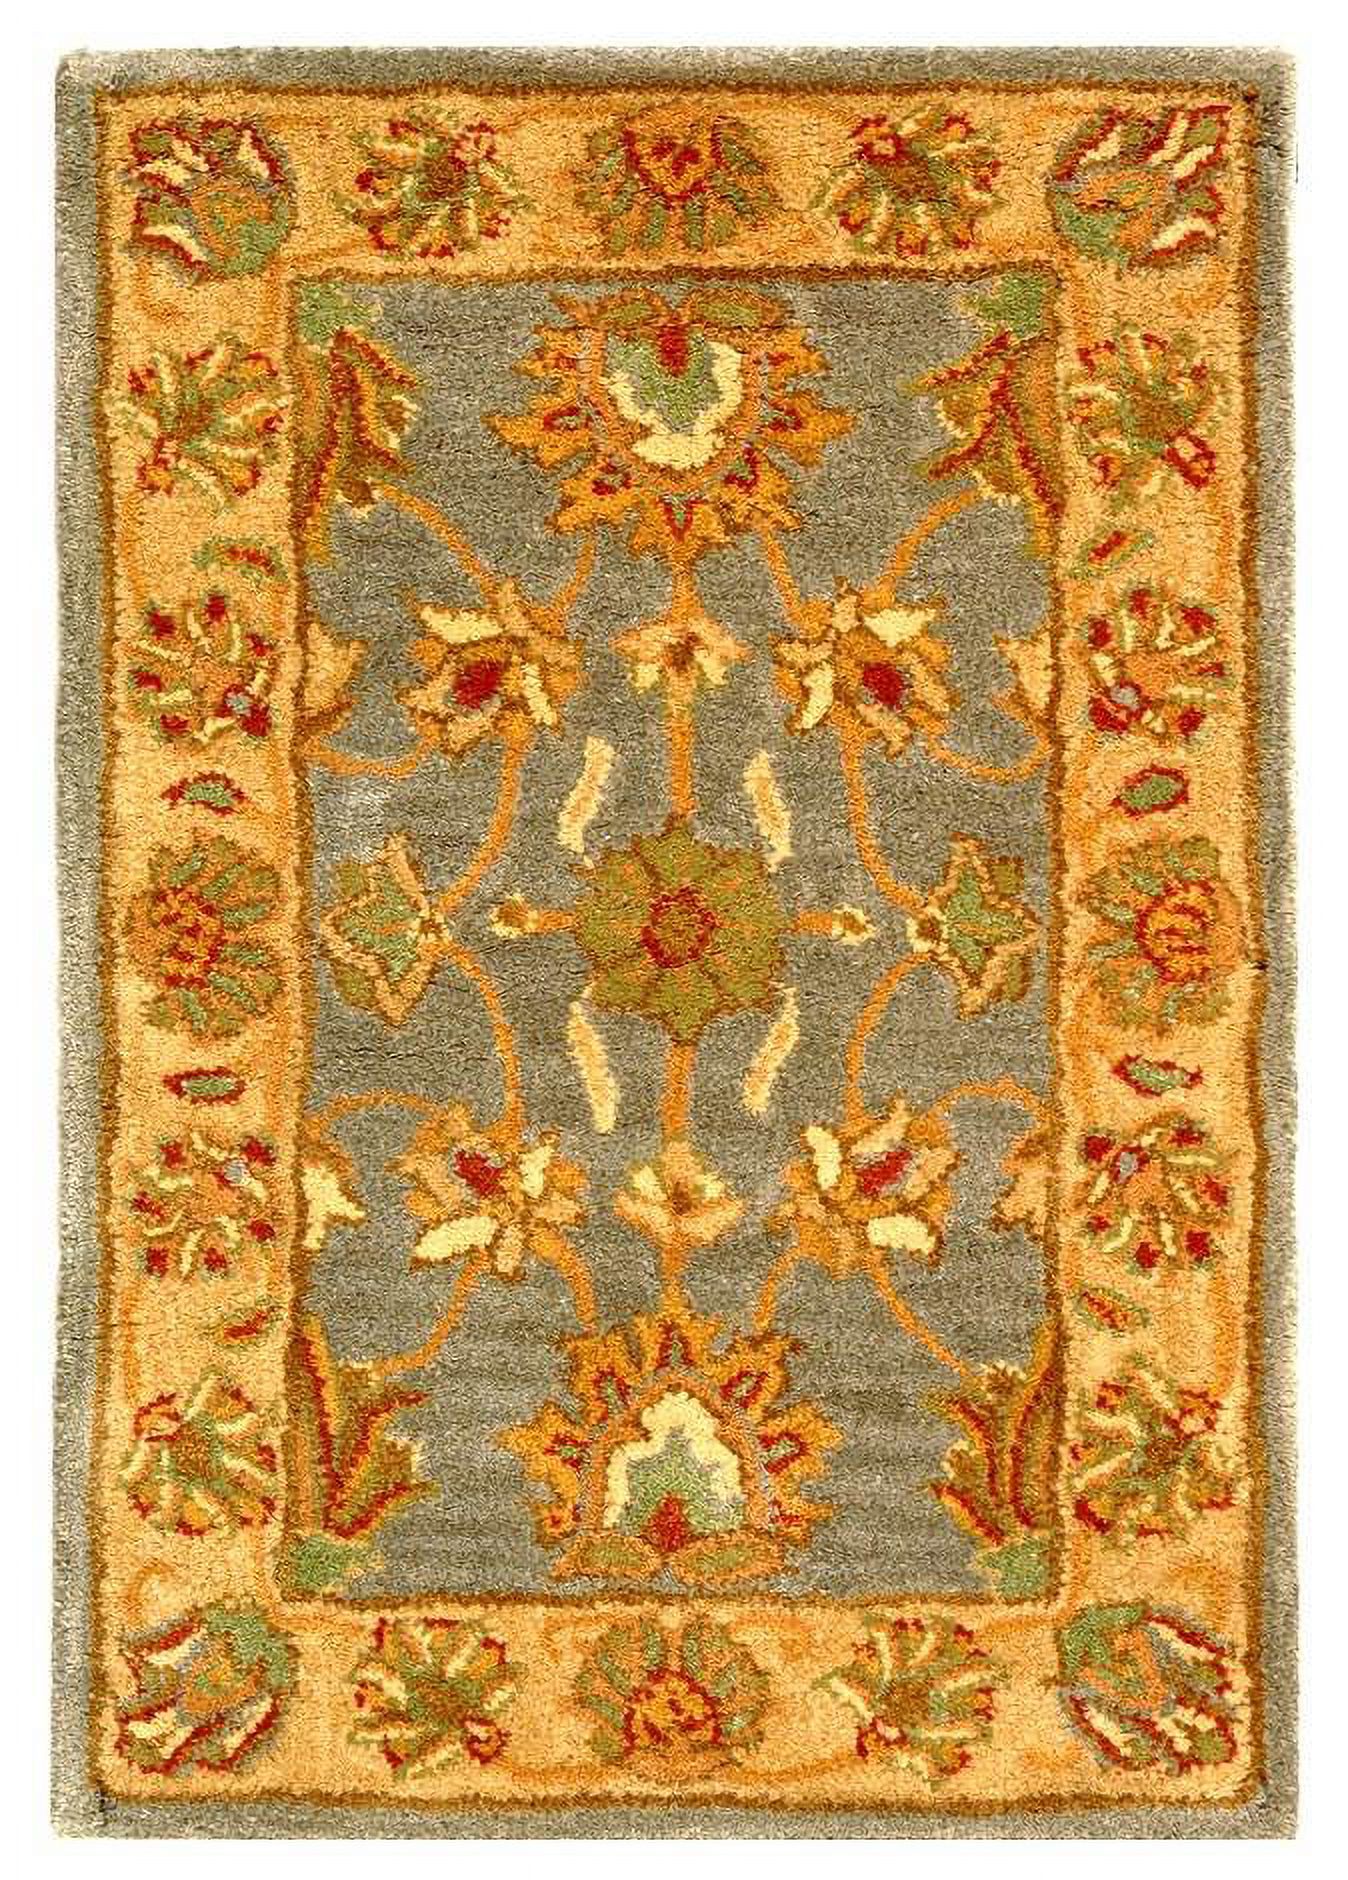 SAFAVIEH Heritage Regis Traditional Wool Area Rug, Blue/Beige, 2' x 3' - image 1 of 10